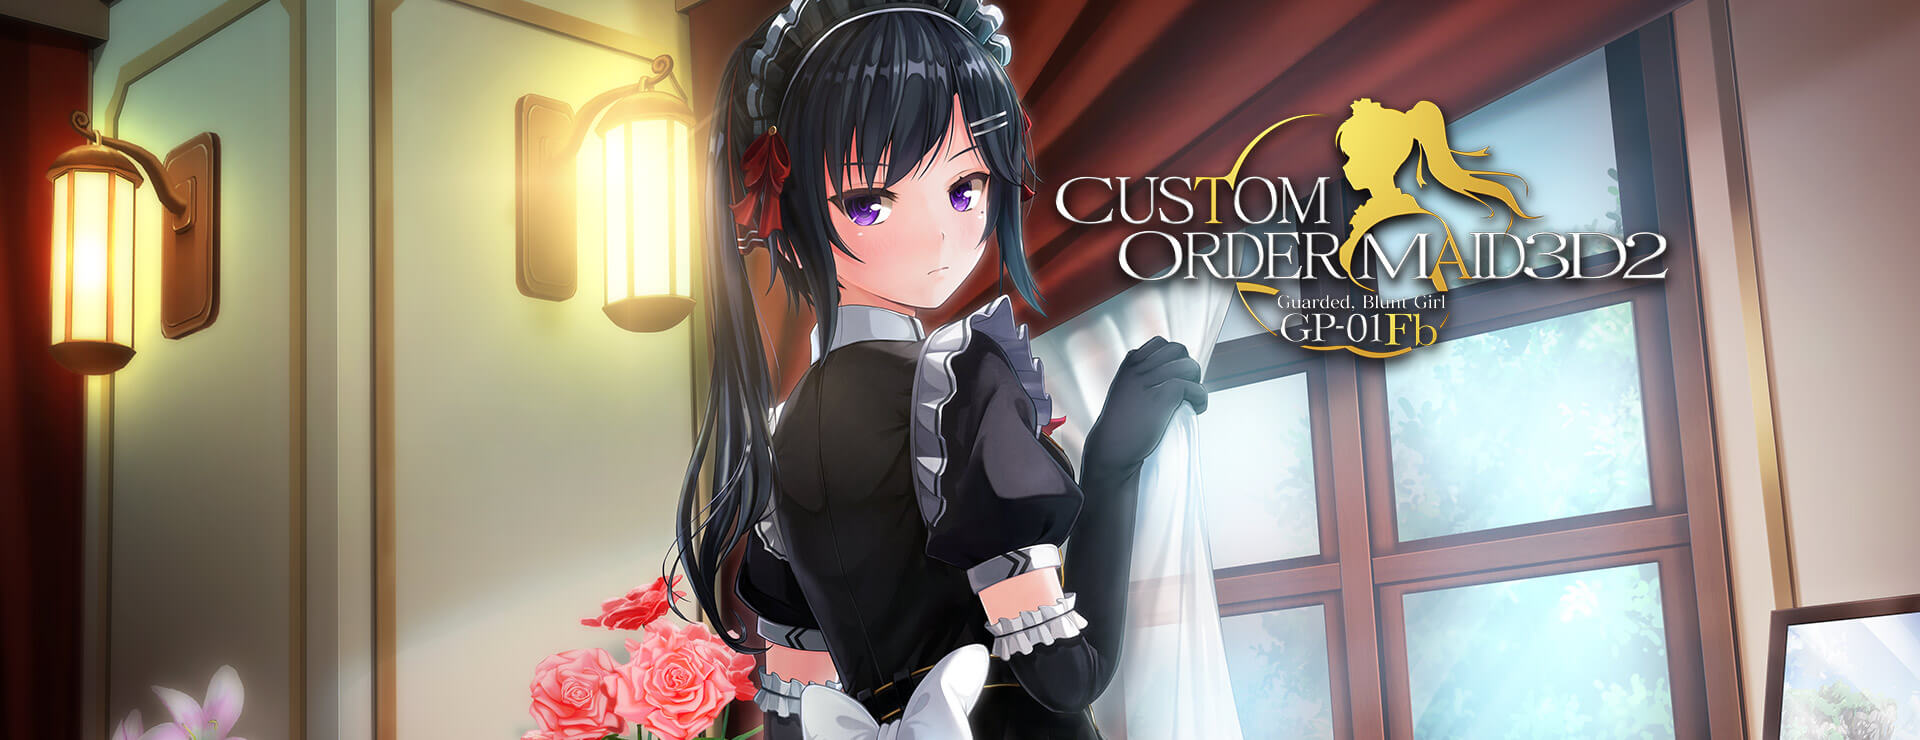 Custom Order Maid 3D2 Guarded, Blunt Girl GP-01fb DLC - 仿真游戏 遊戲